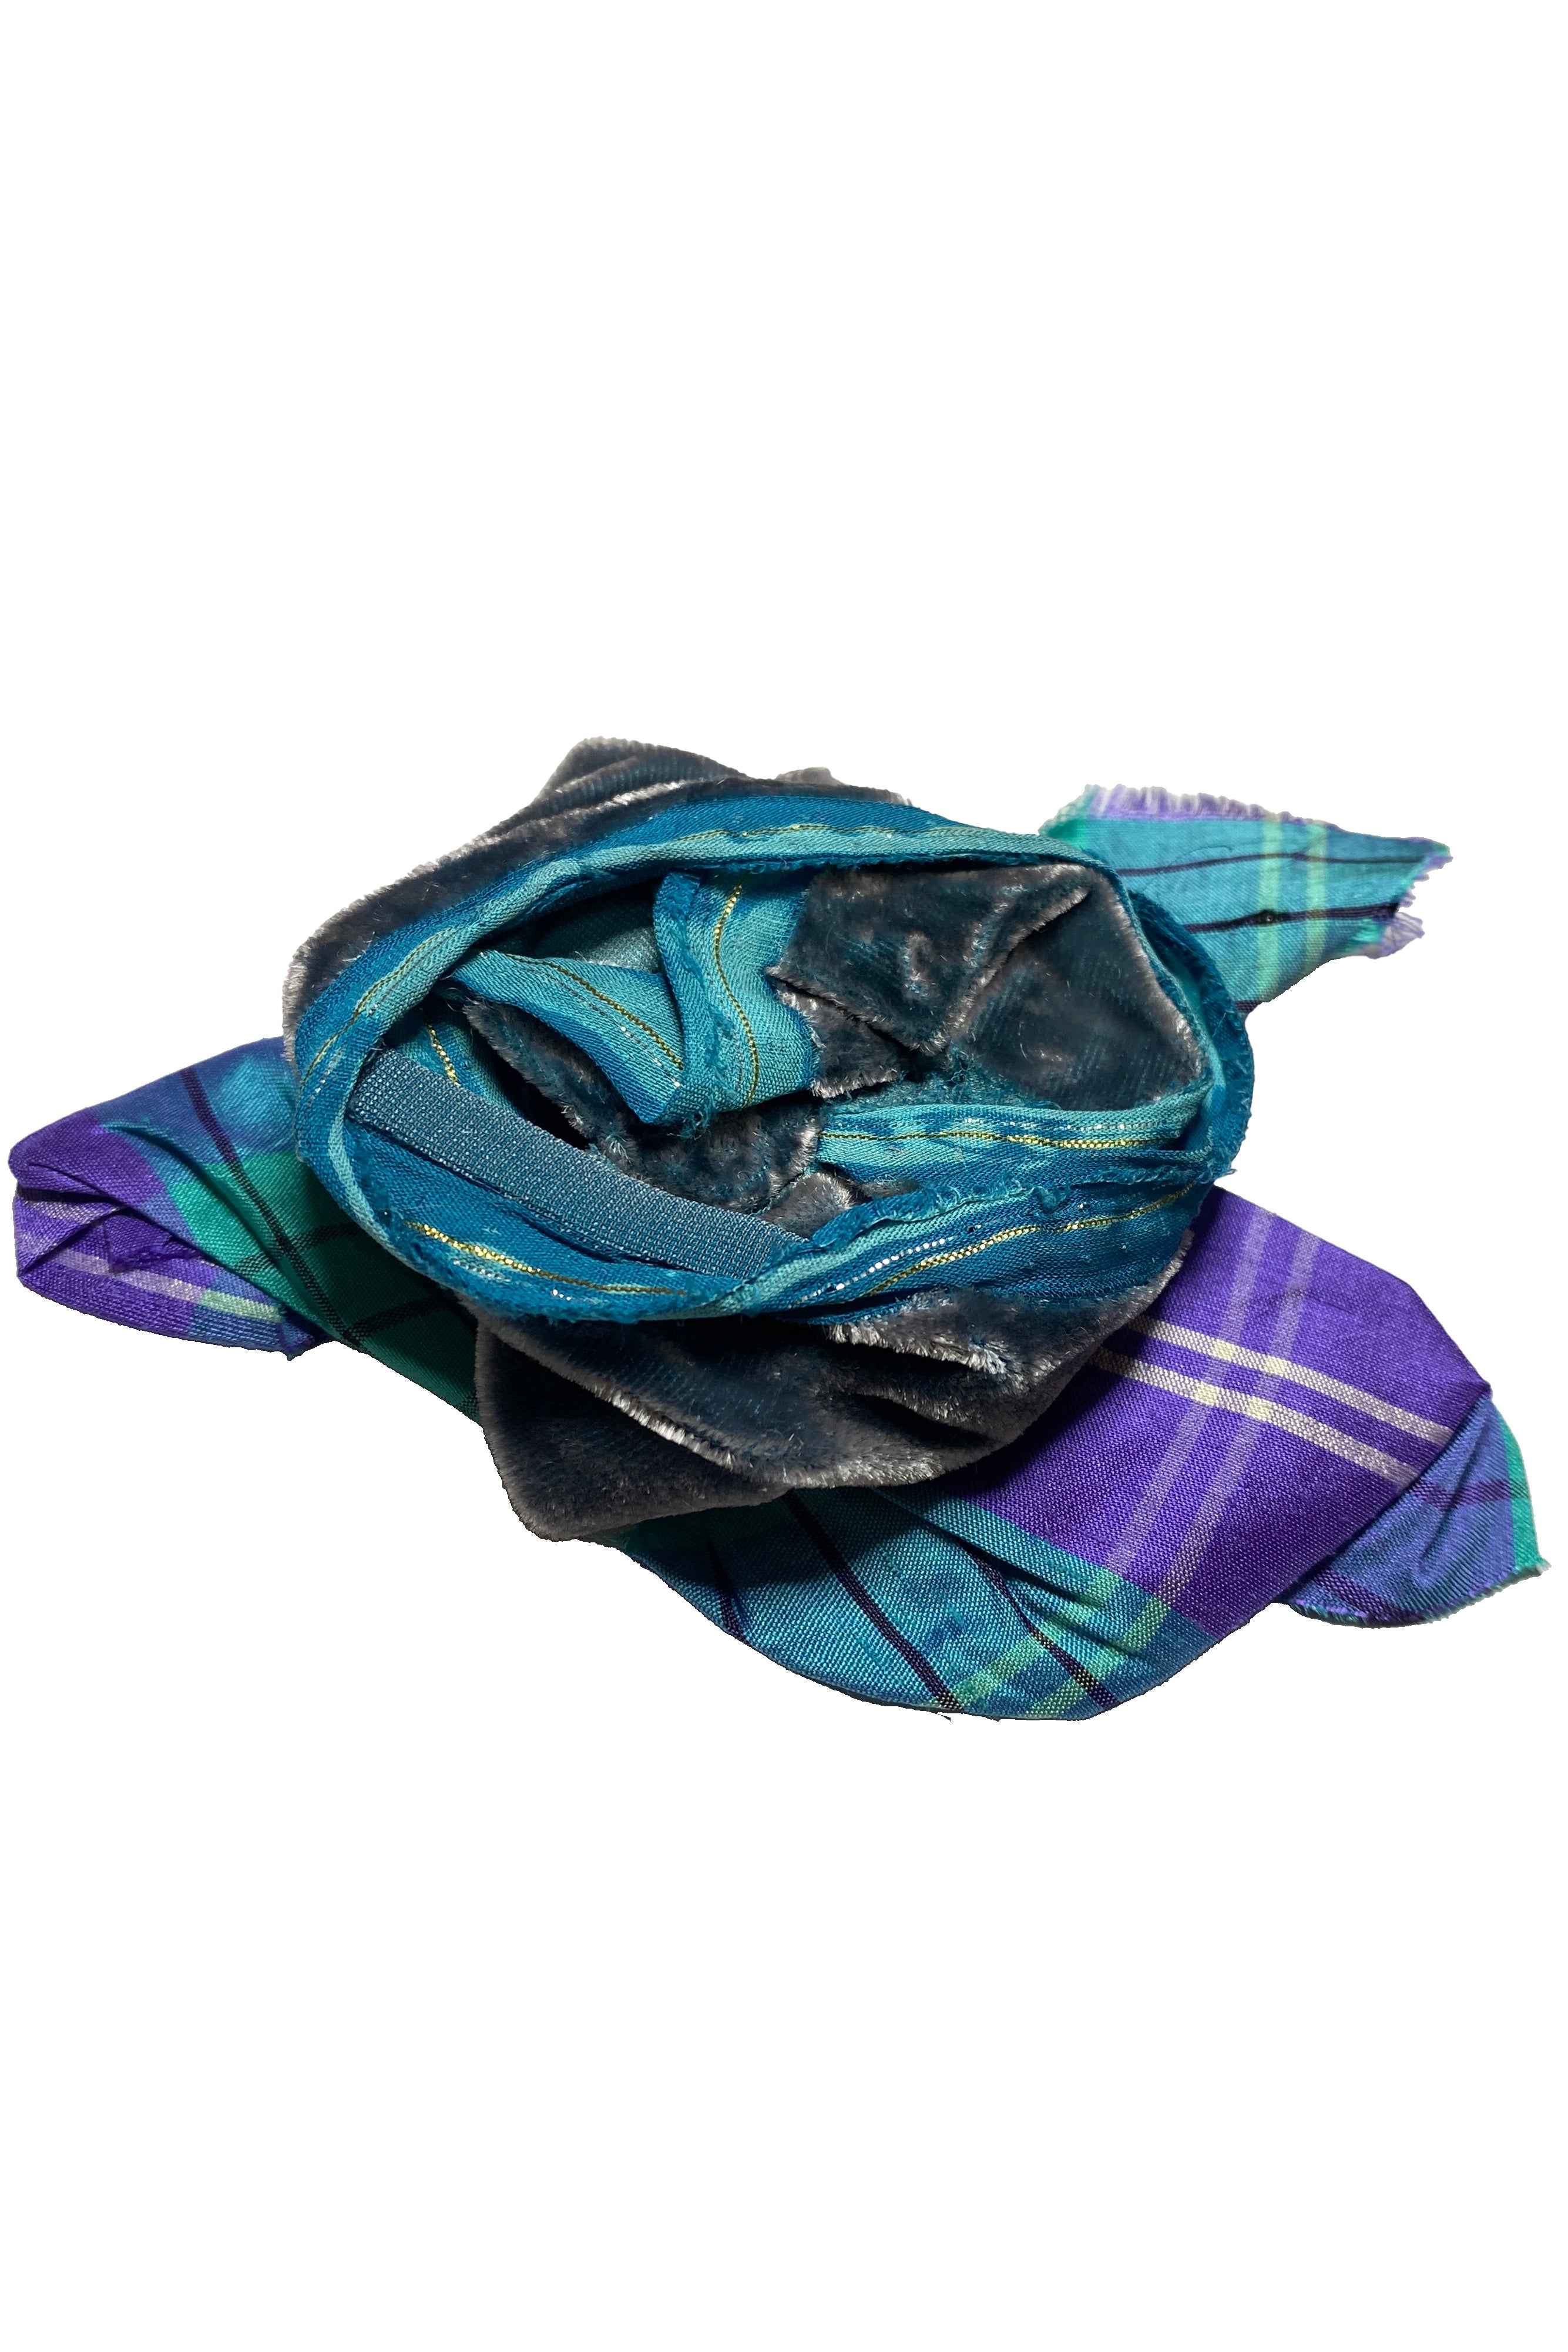 Silk & Velvet Floral Brooch - Blue & Purple, Turquoise Plaid Clip